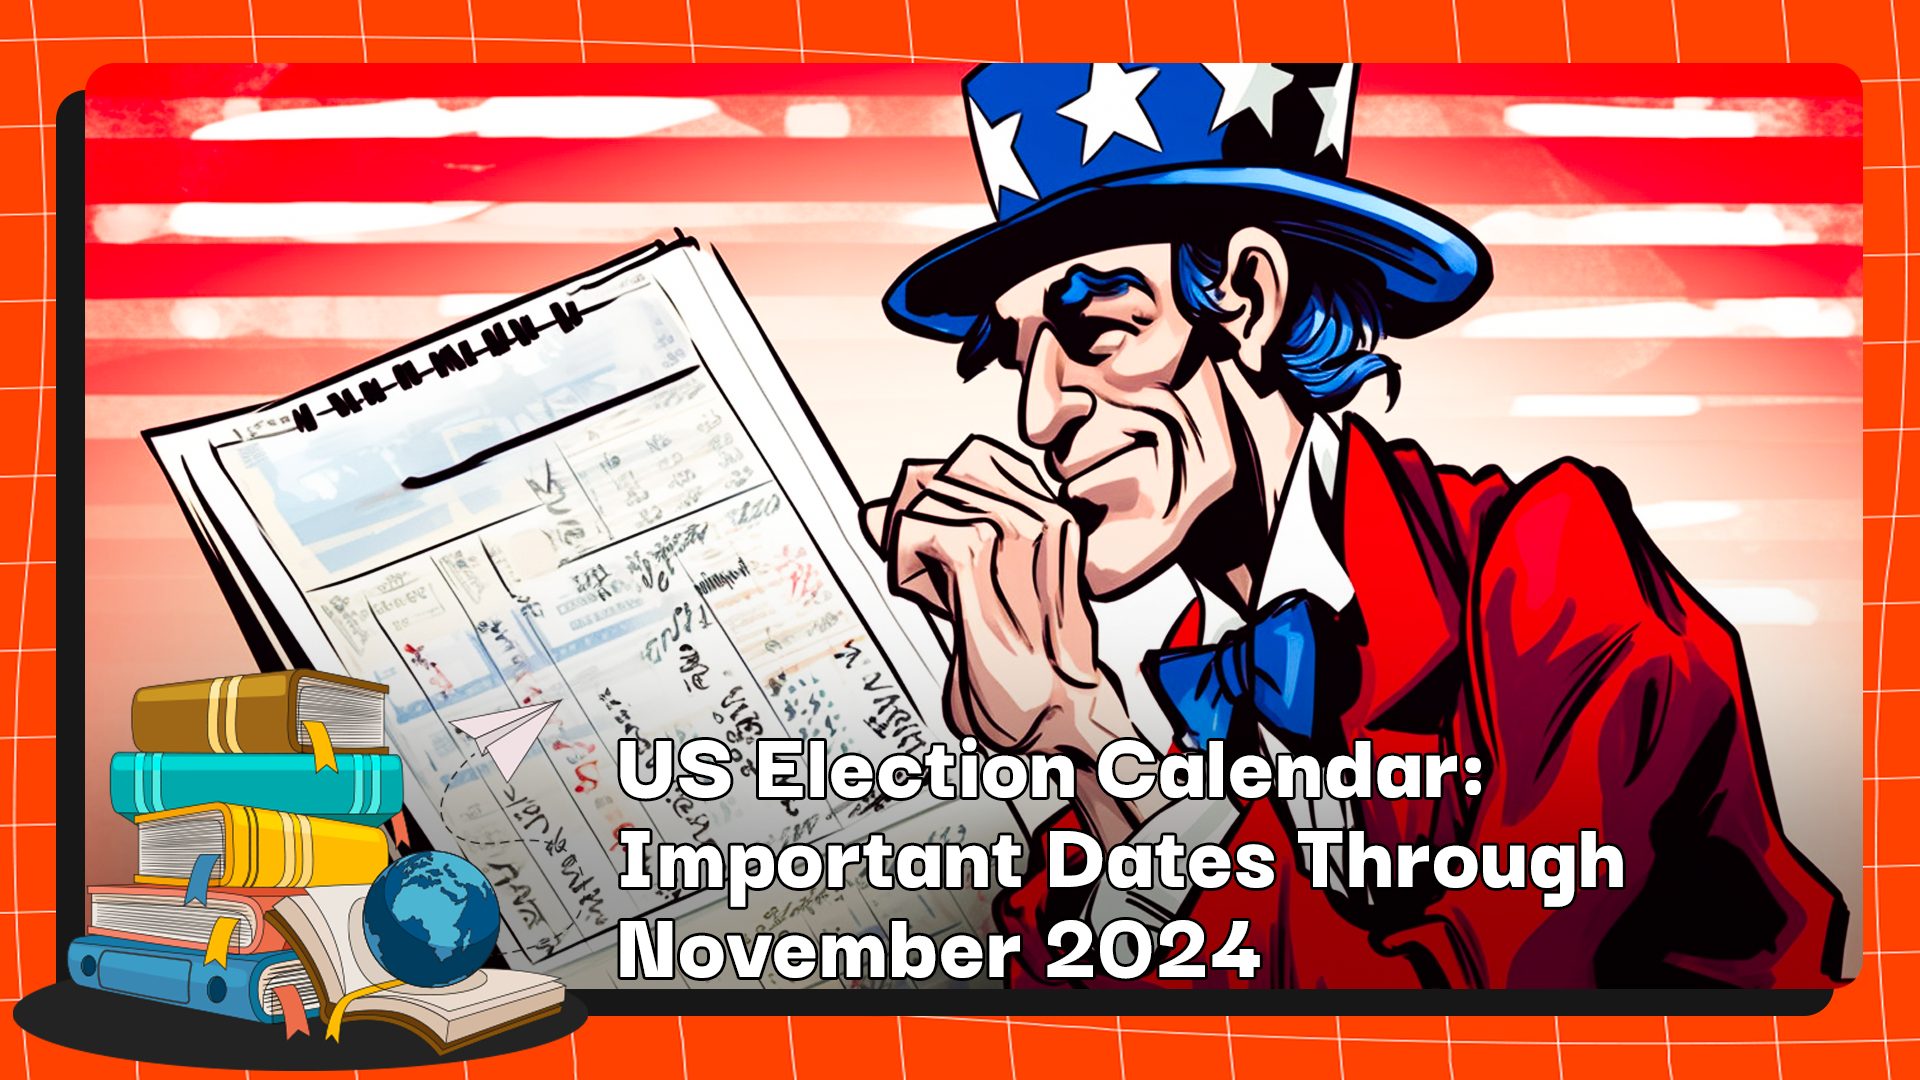 Calendrier électoral américain : dates importantes jusqu’en novembre 2024